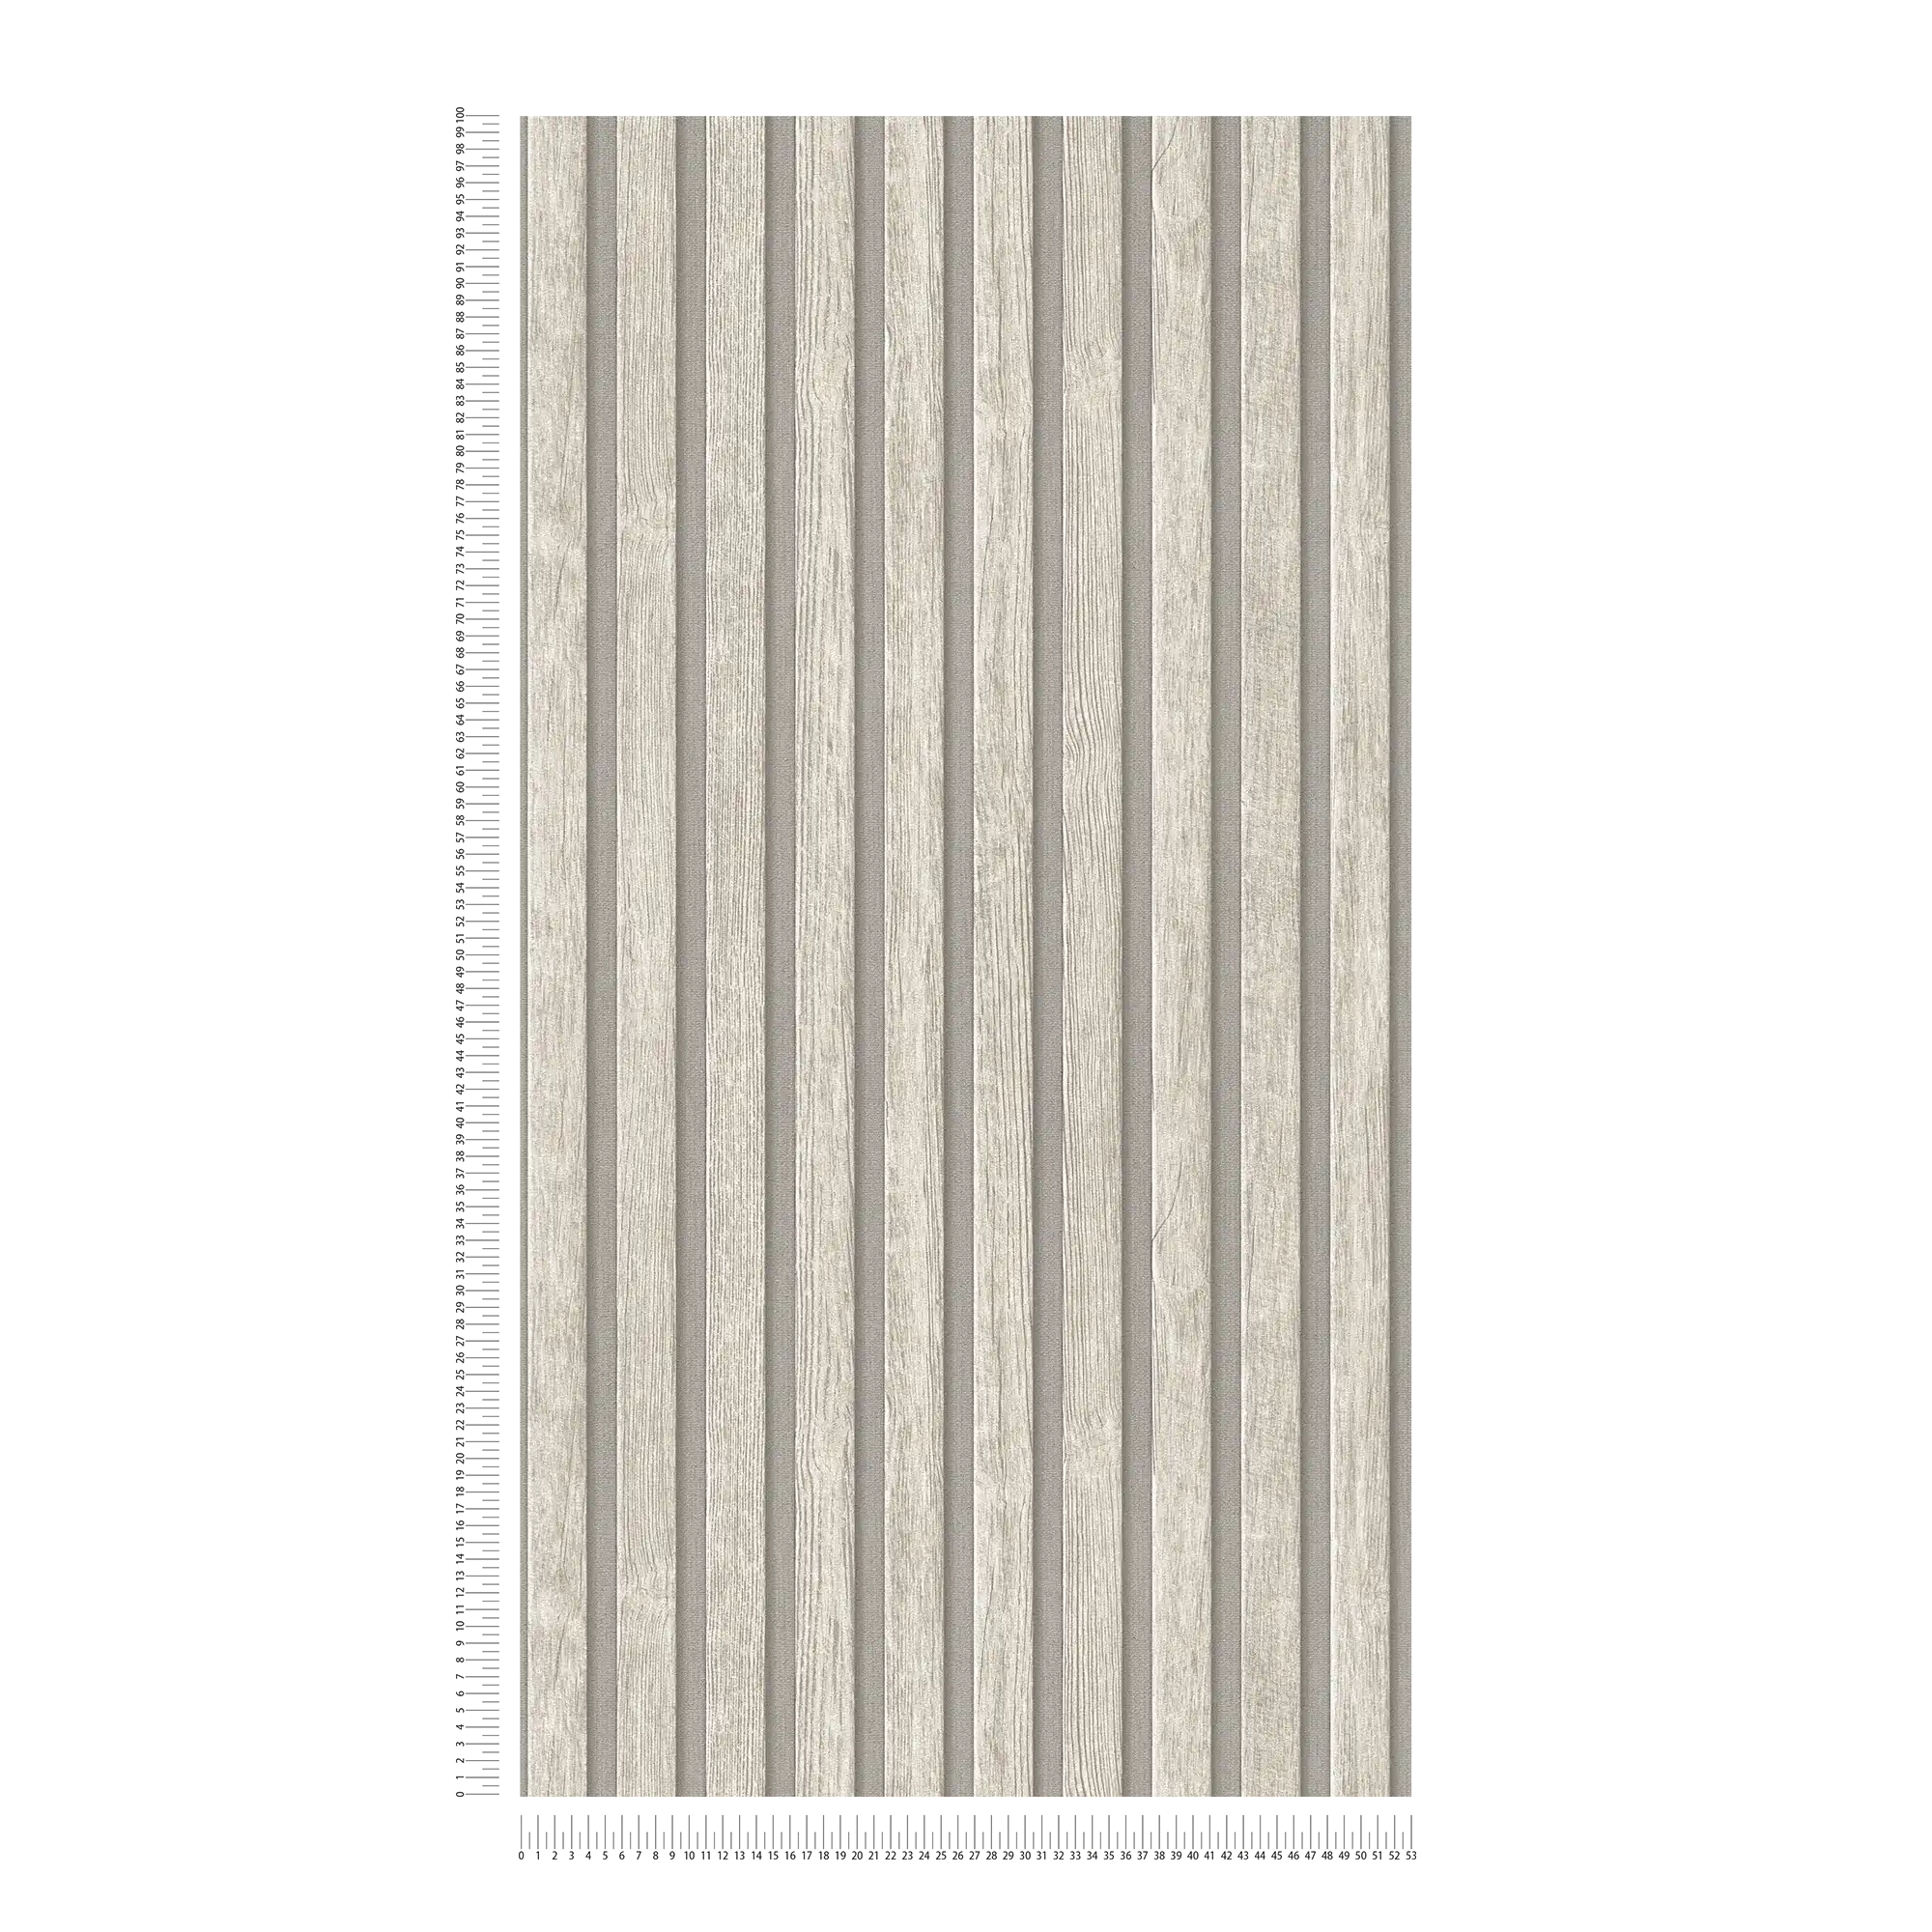             Vliestapete mit Holzpaneel-Muster – Grau, Creme
        